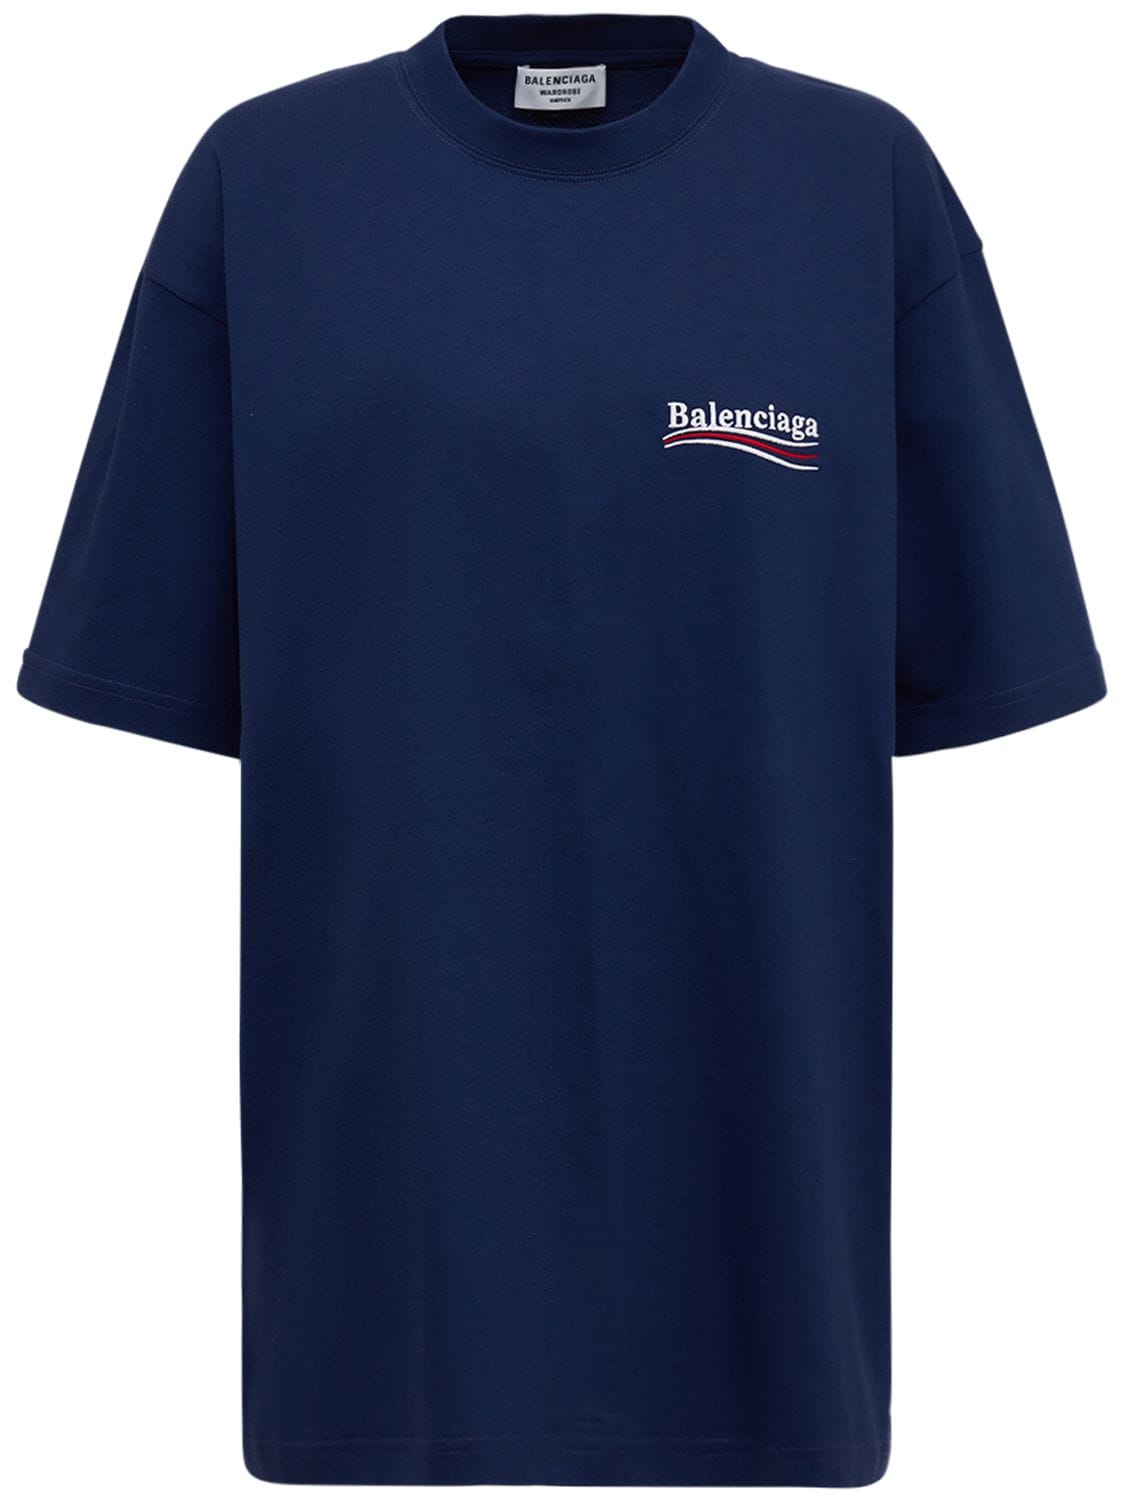 Balenciaga Political Campaign Regular T-shirt in Blue for Men